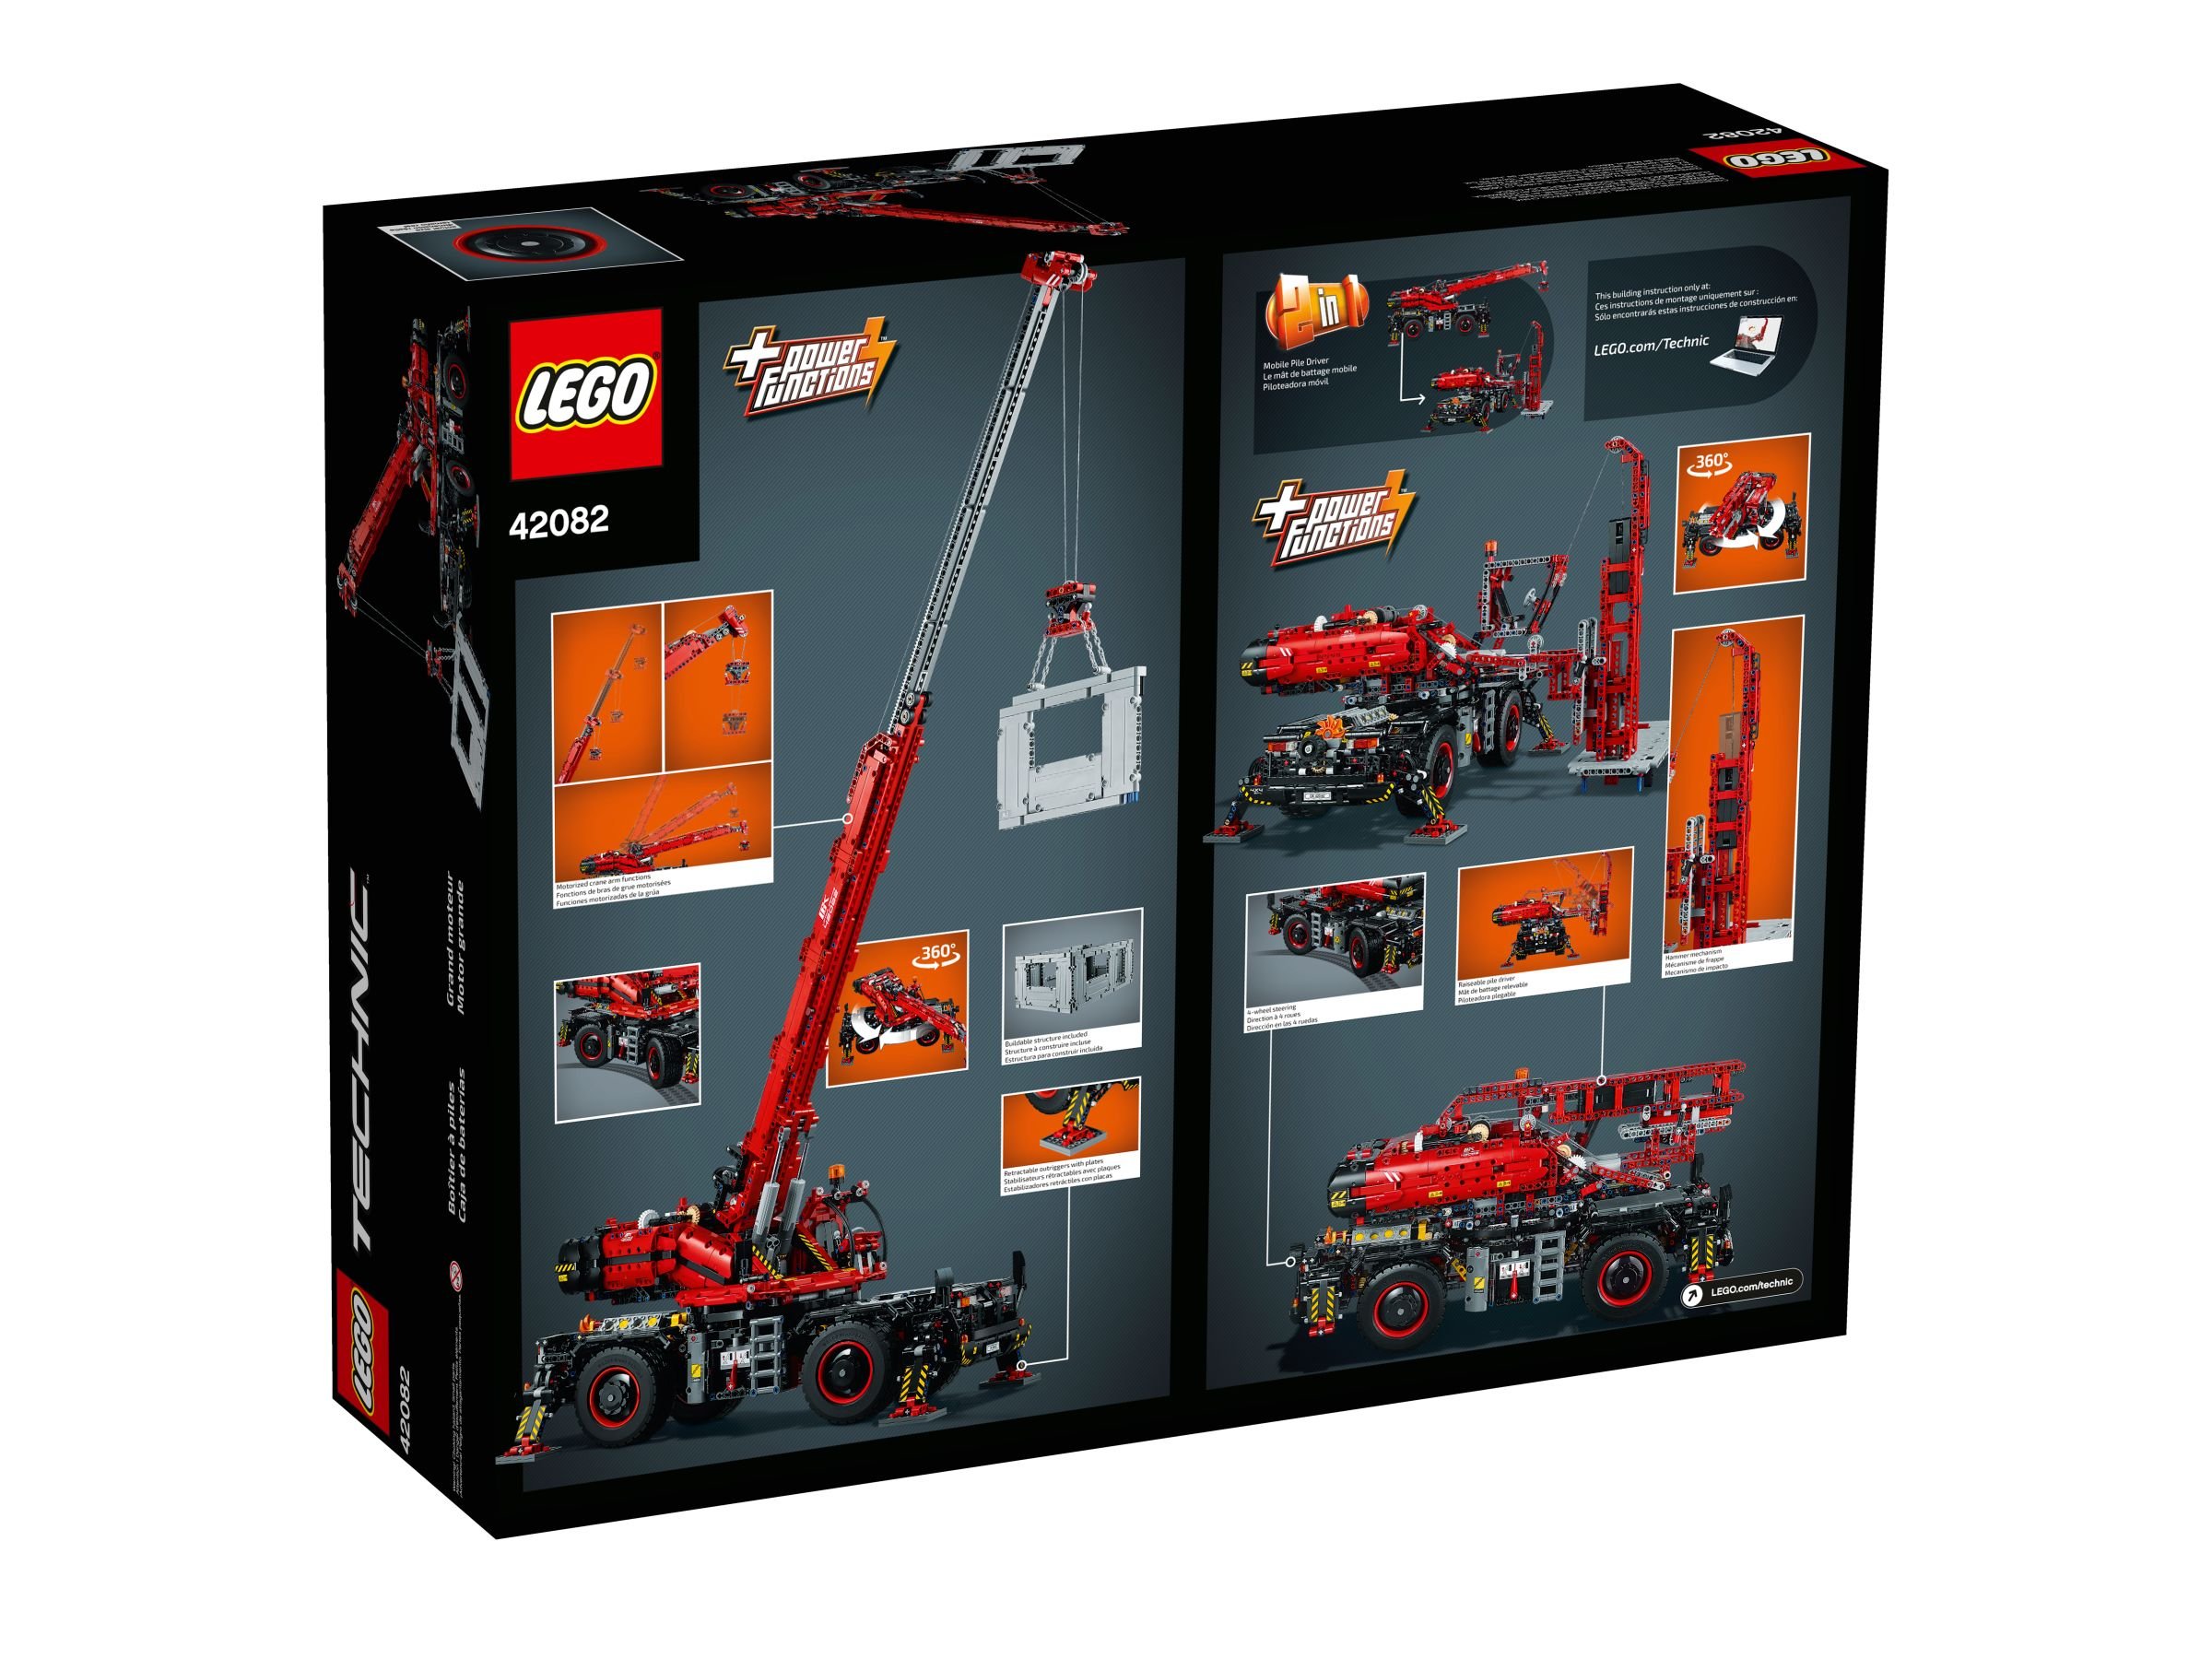 LEGO Technic 42082 Geländegängiger Kranwagen LEGO_42082_alt4.jpg